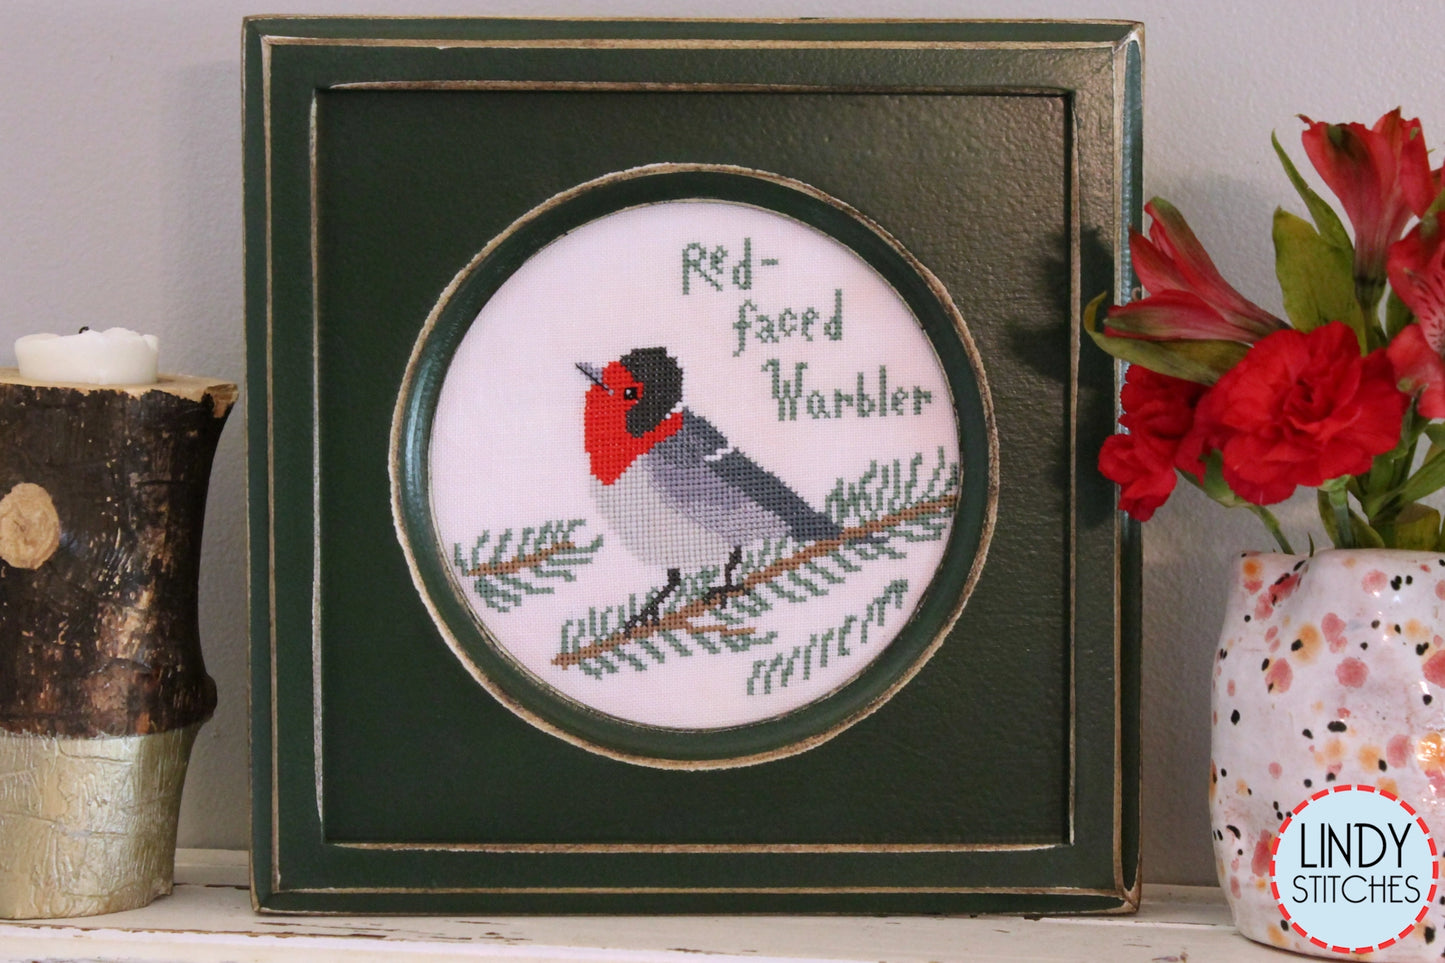 Red Faced Warbler Bird Crush Club Cross Stitch Pattern #12